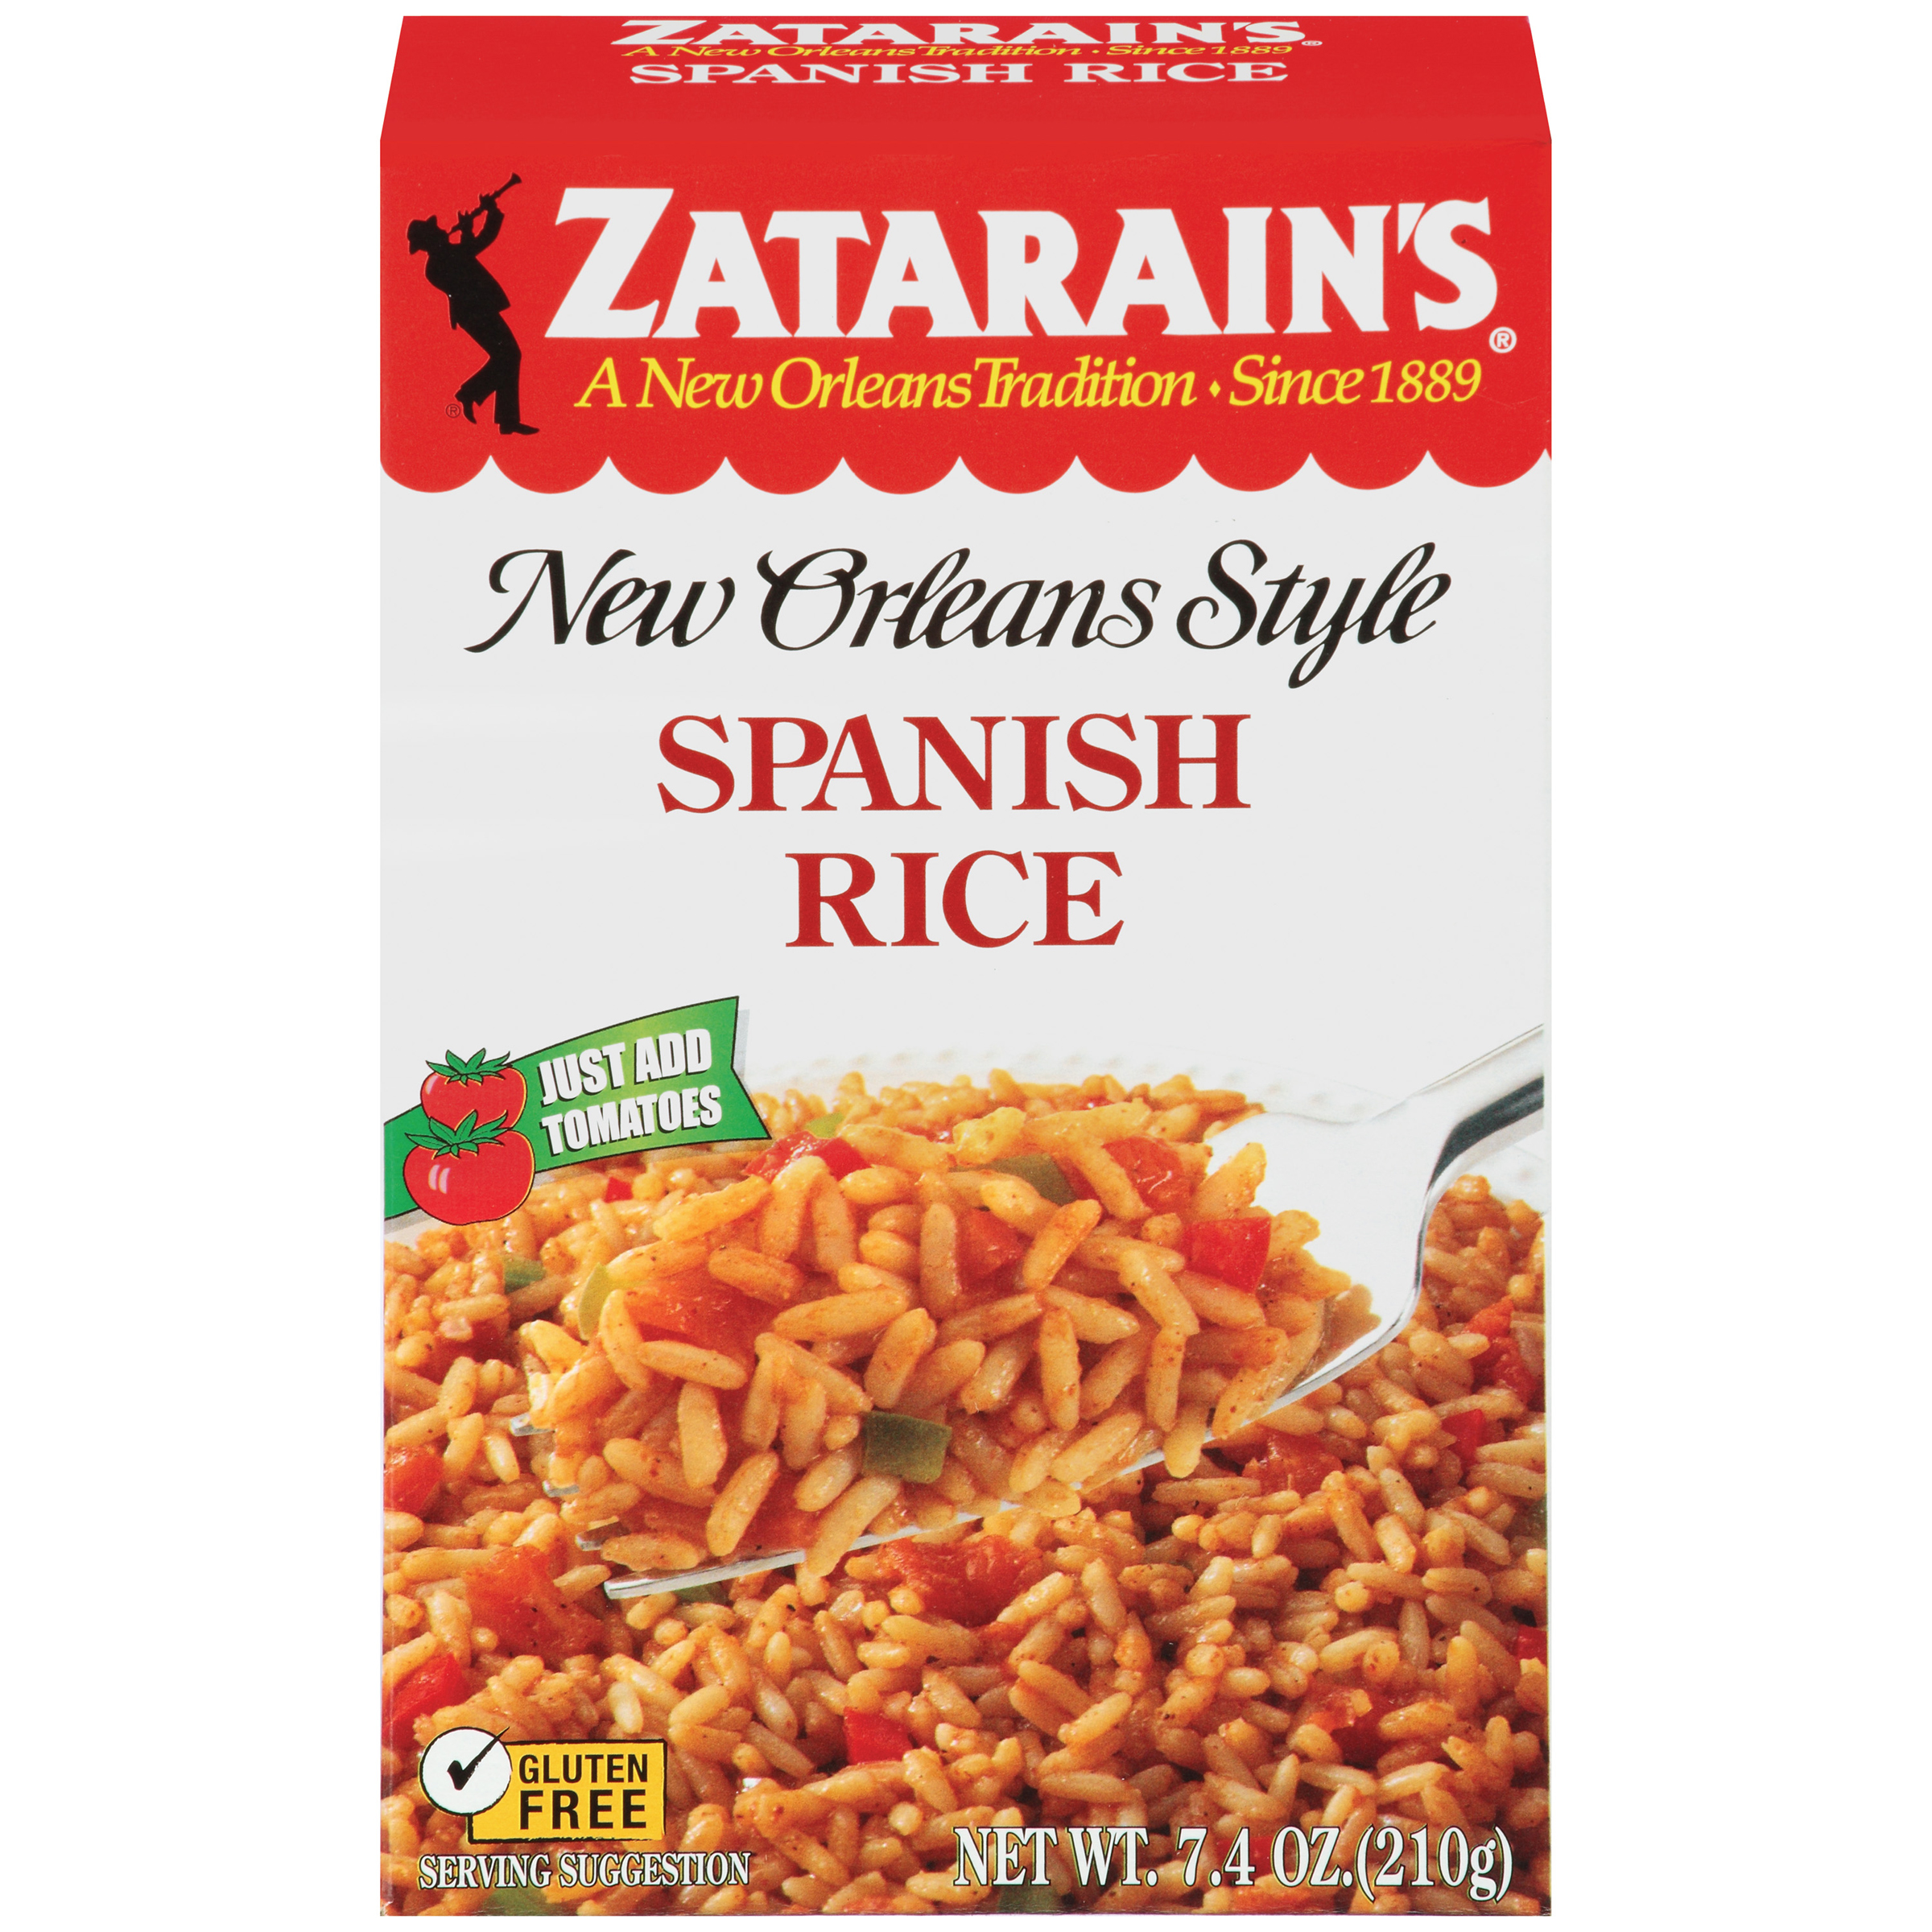 Zatarain's New Orleans Style Spanish Rice, 7.4 oz (210 g)